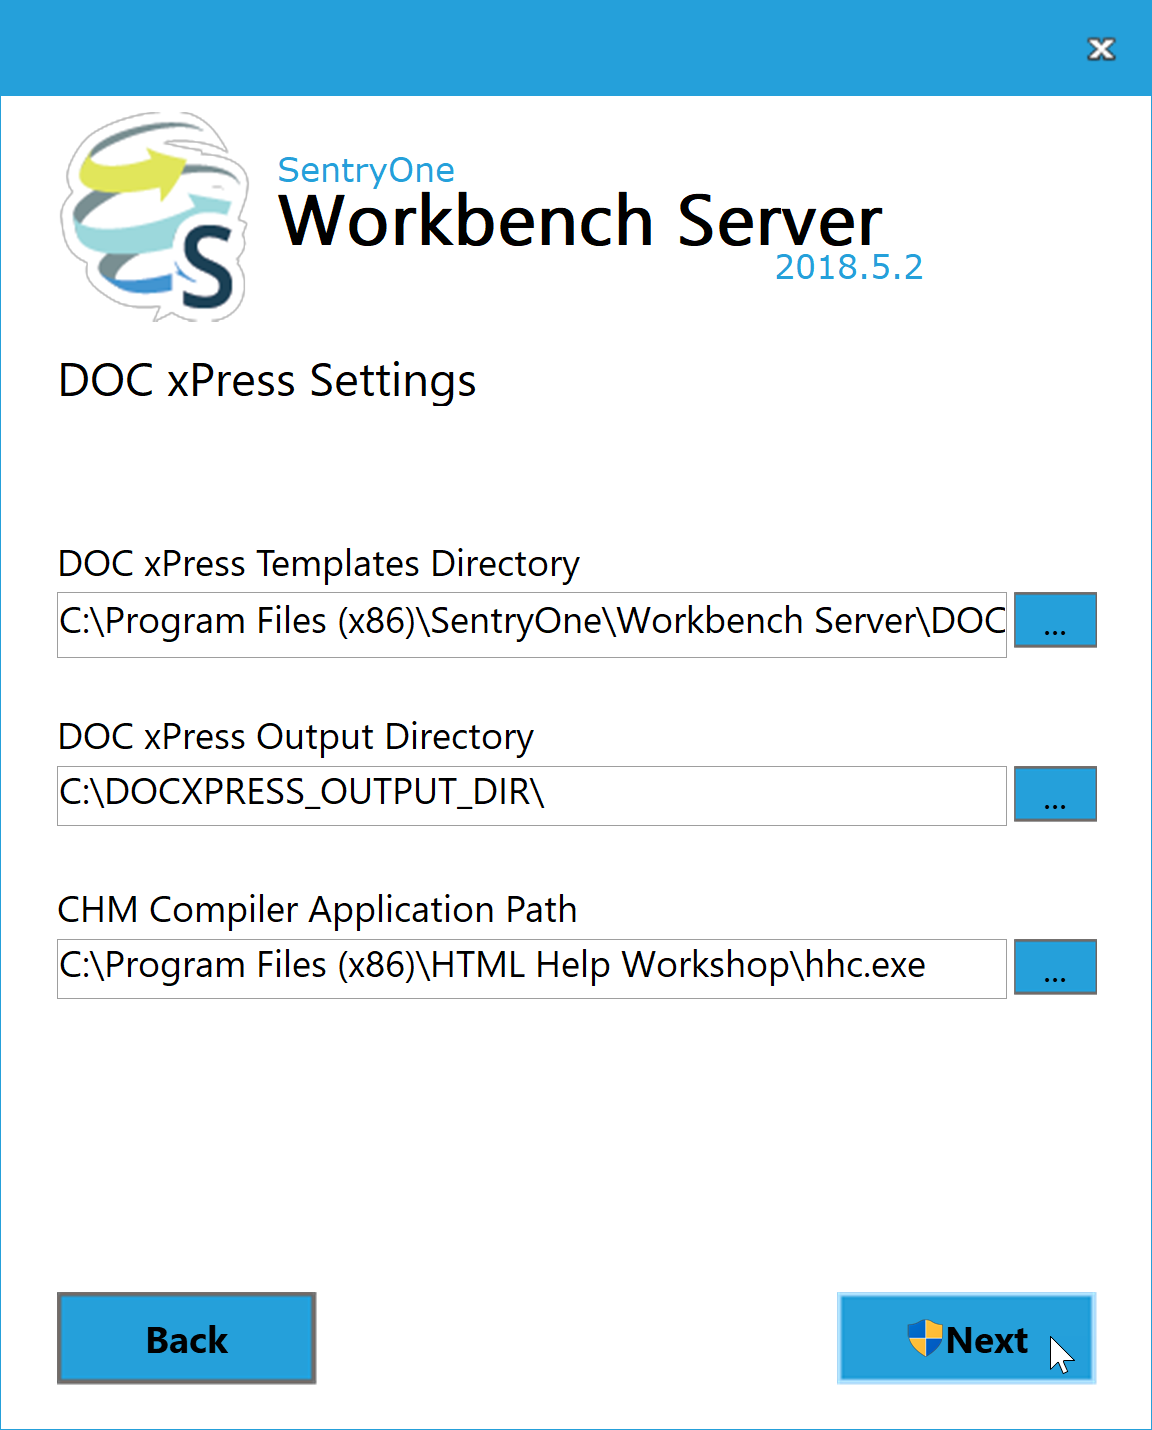 Workbench Server DOC xPress Settings